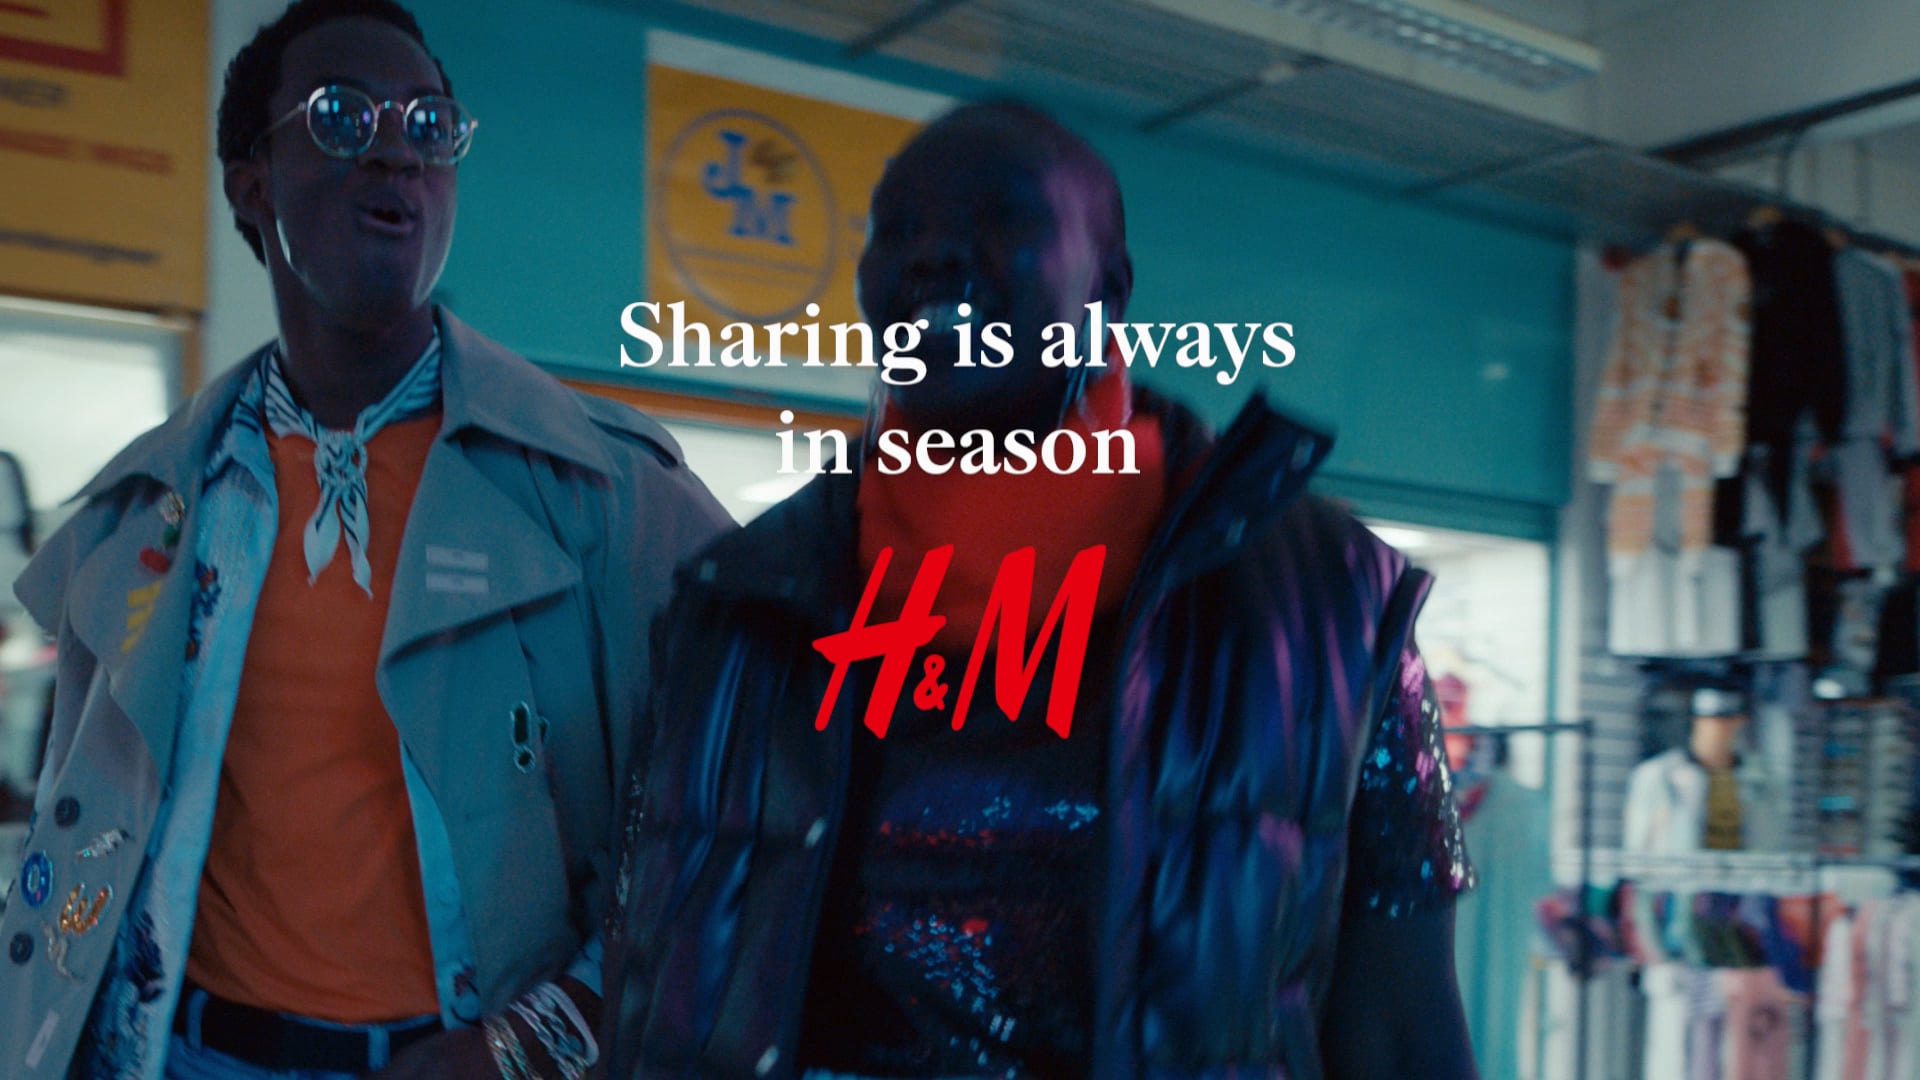 H&M Holidays “Sharing is always in season”